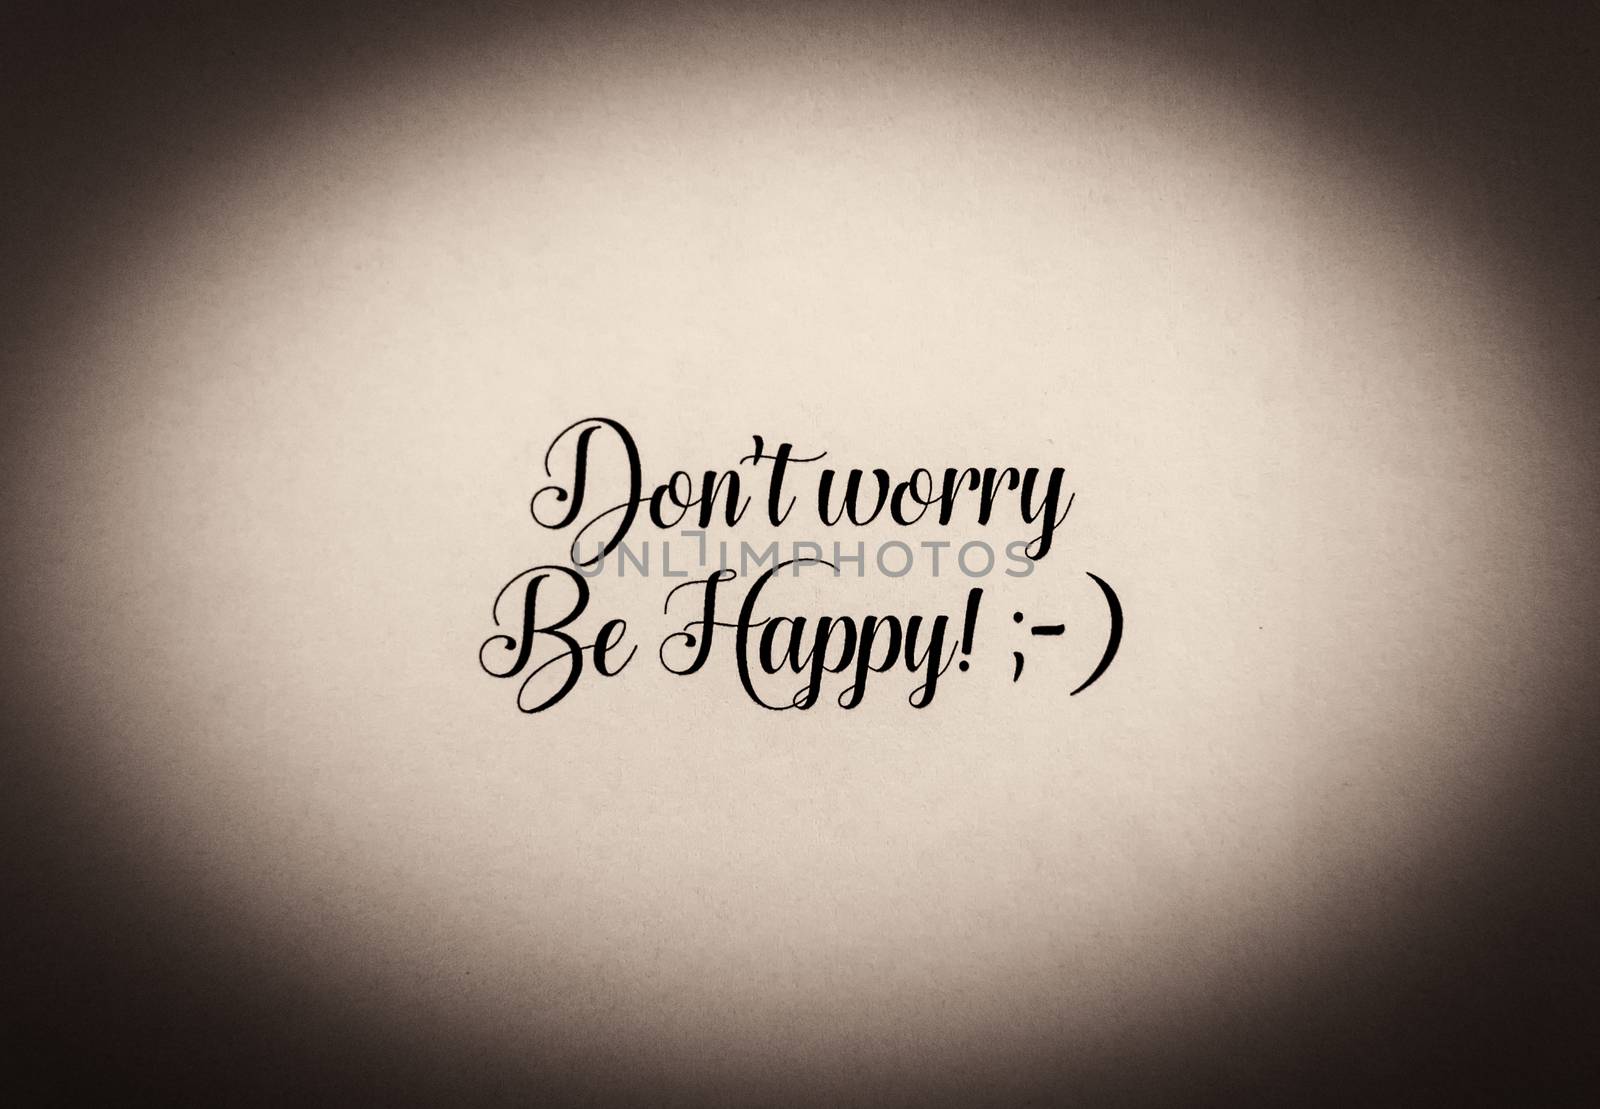 Be happy phrase written in black and white - sephia effect